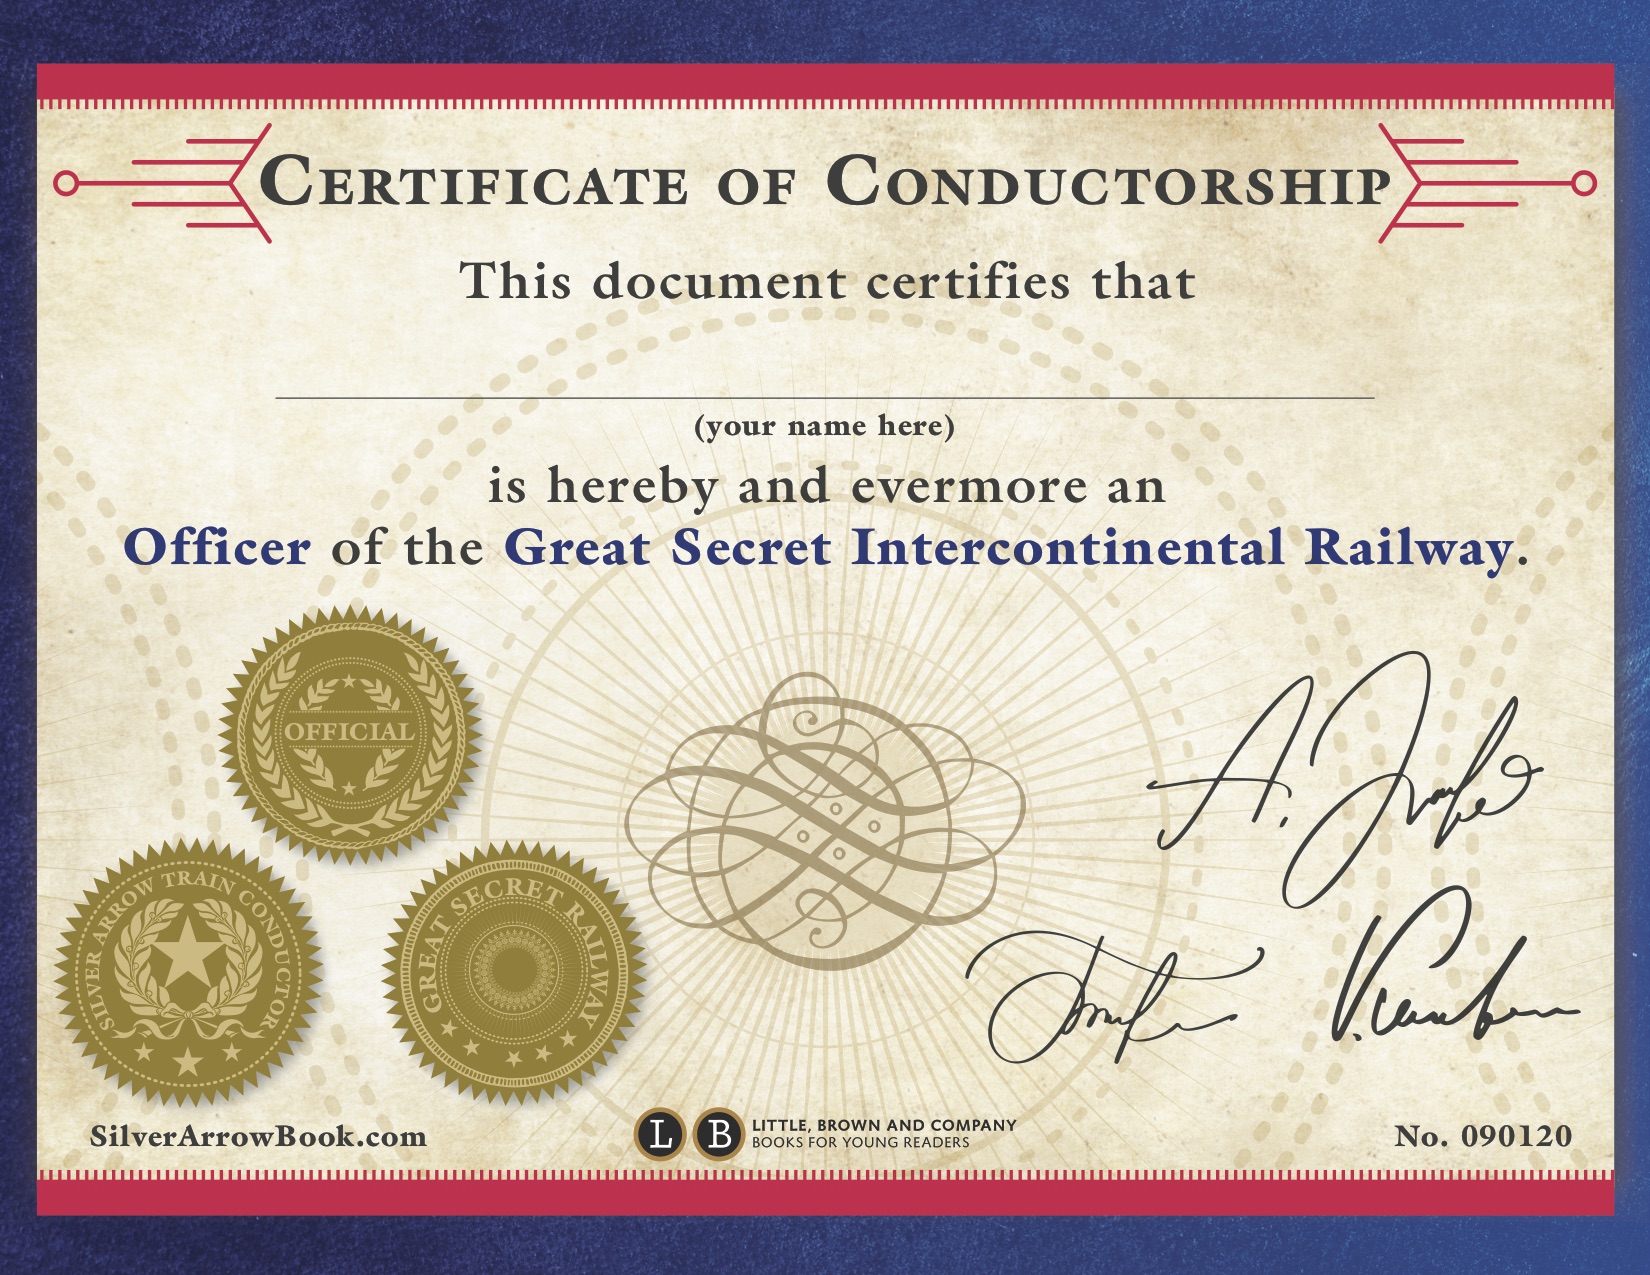 Conductor's Certificate